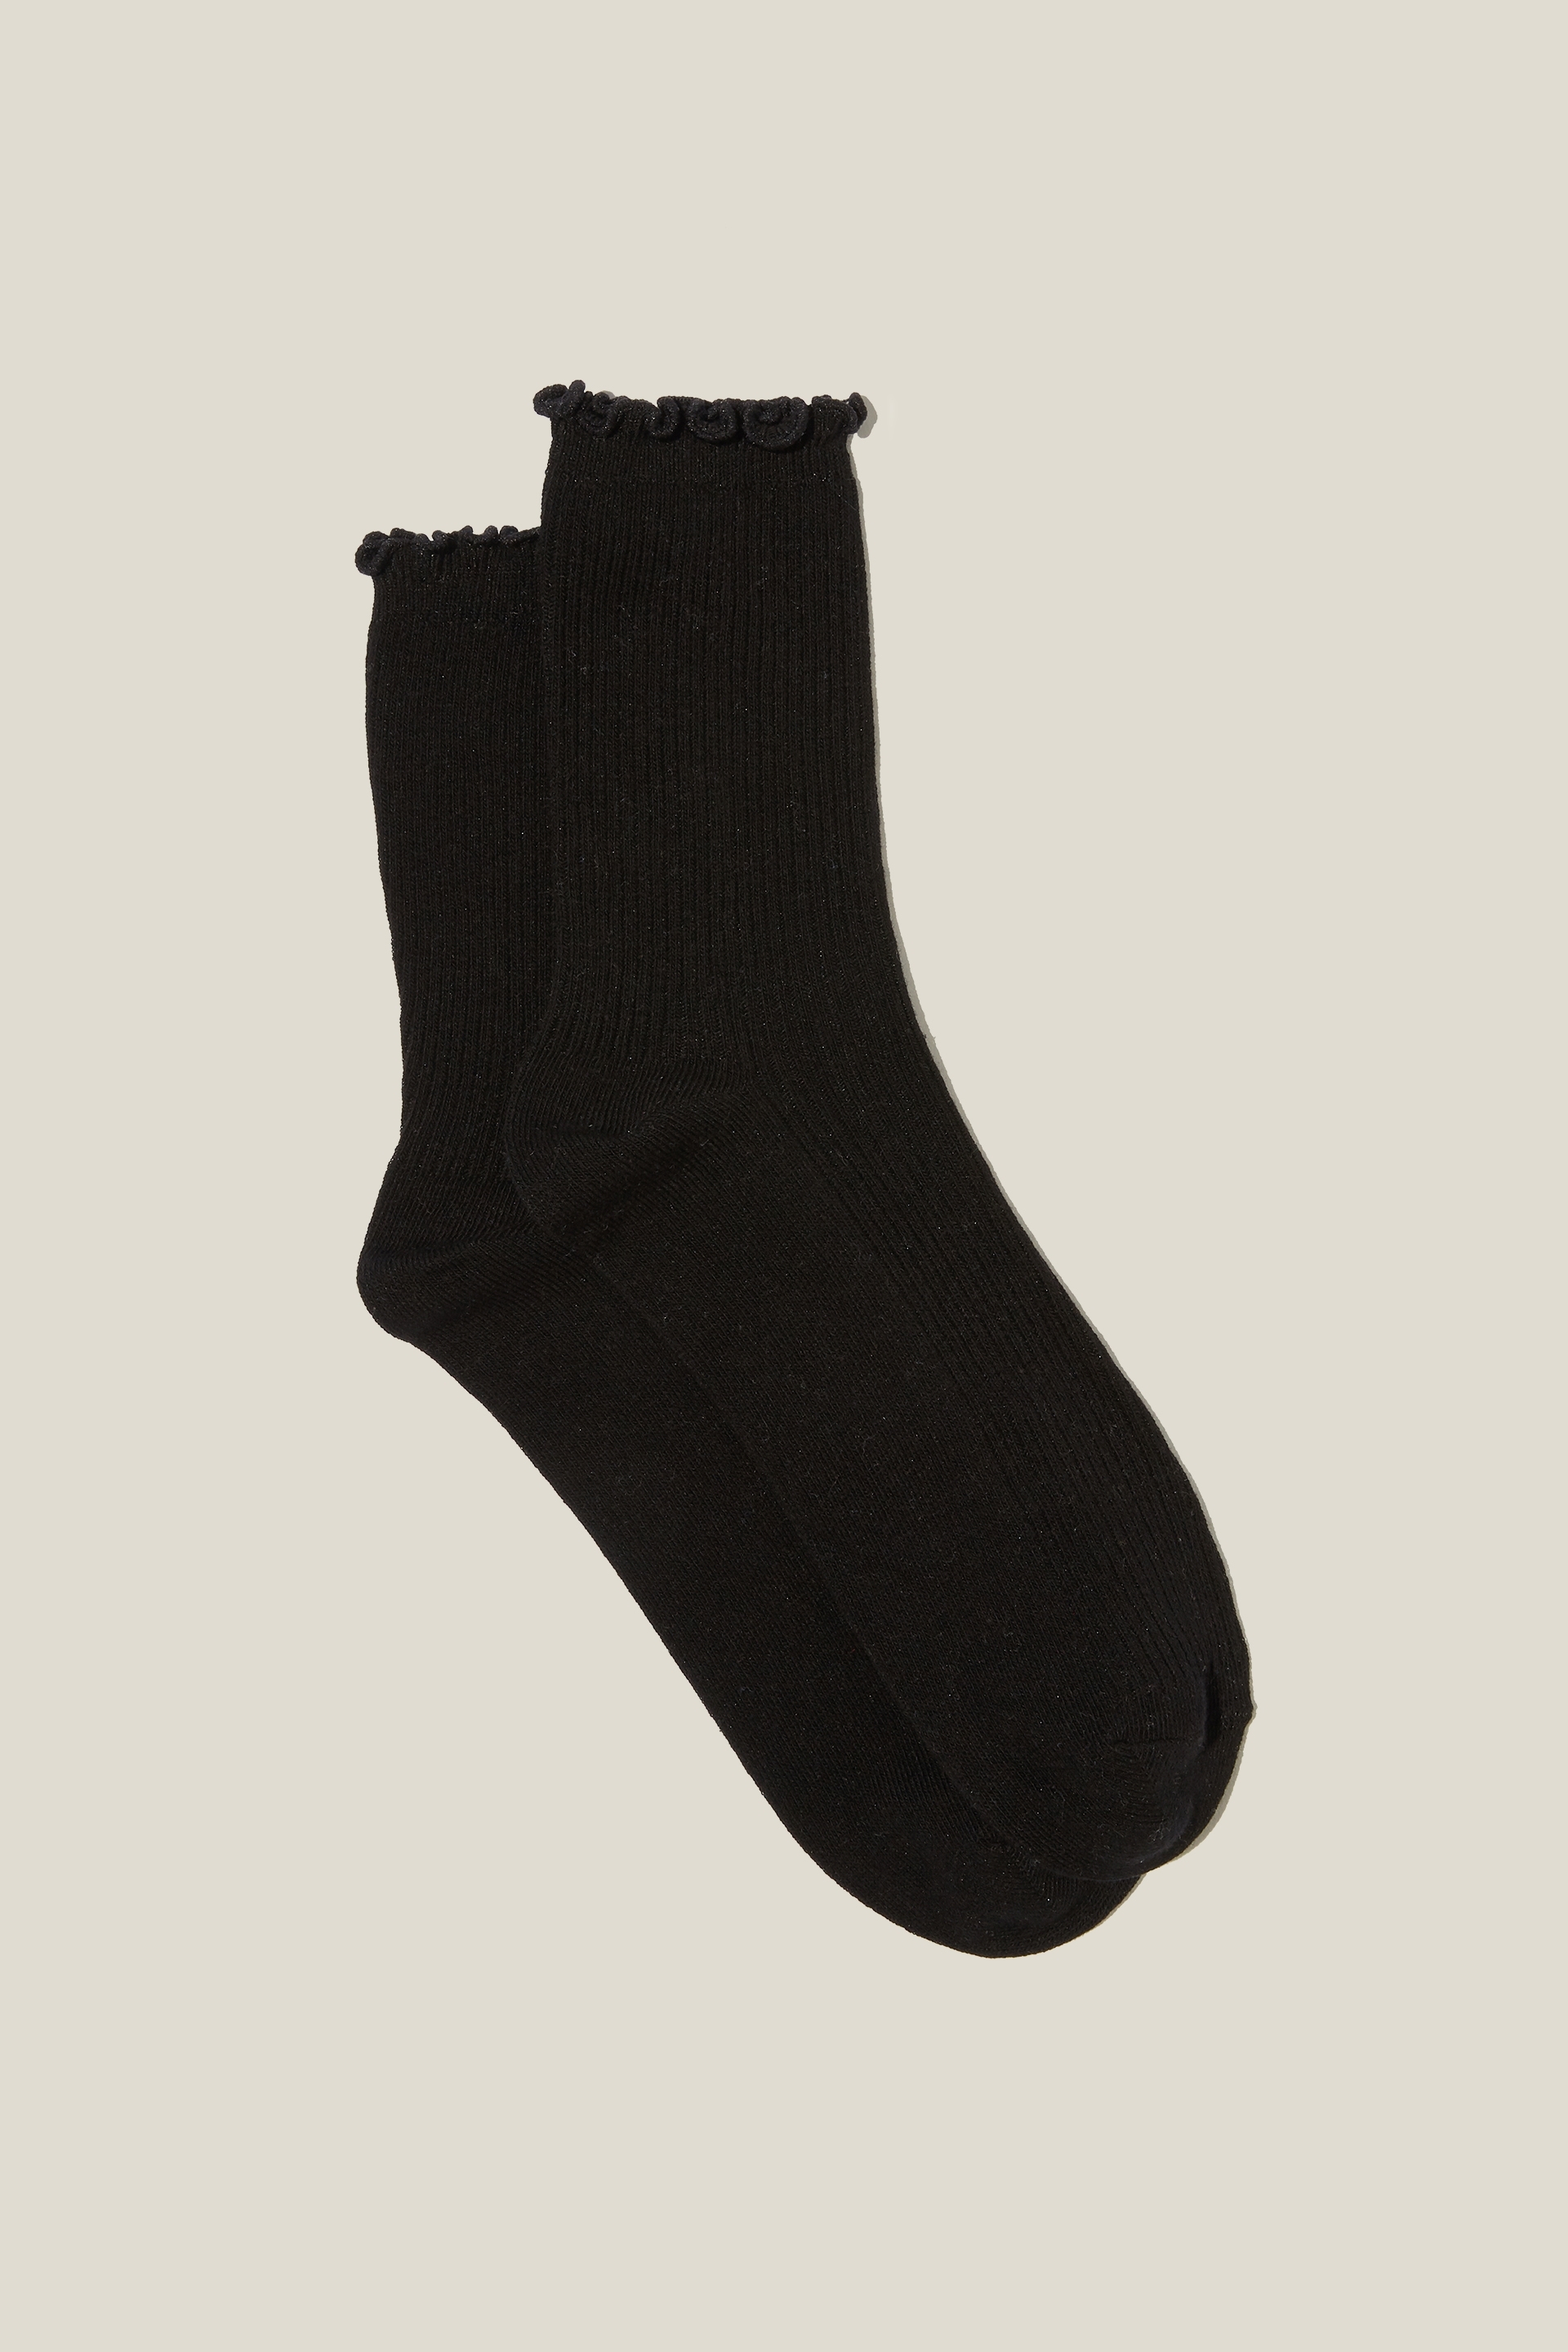 Rubi - Frill Ribbed Crew Sock - Solid black